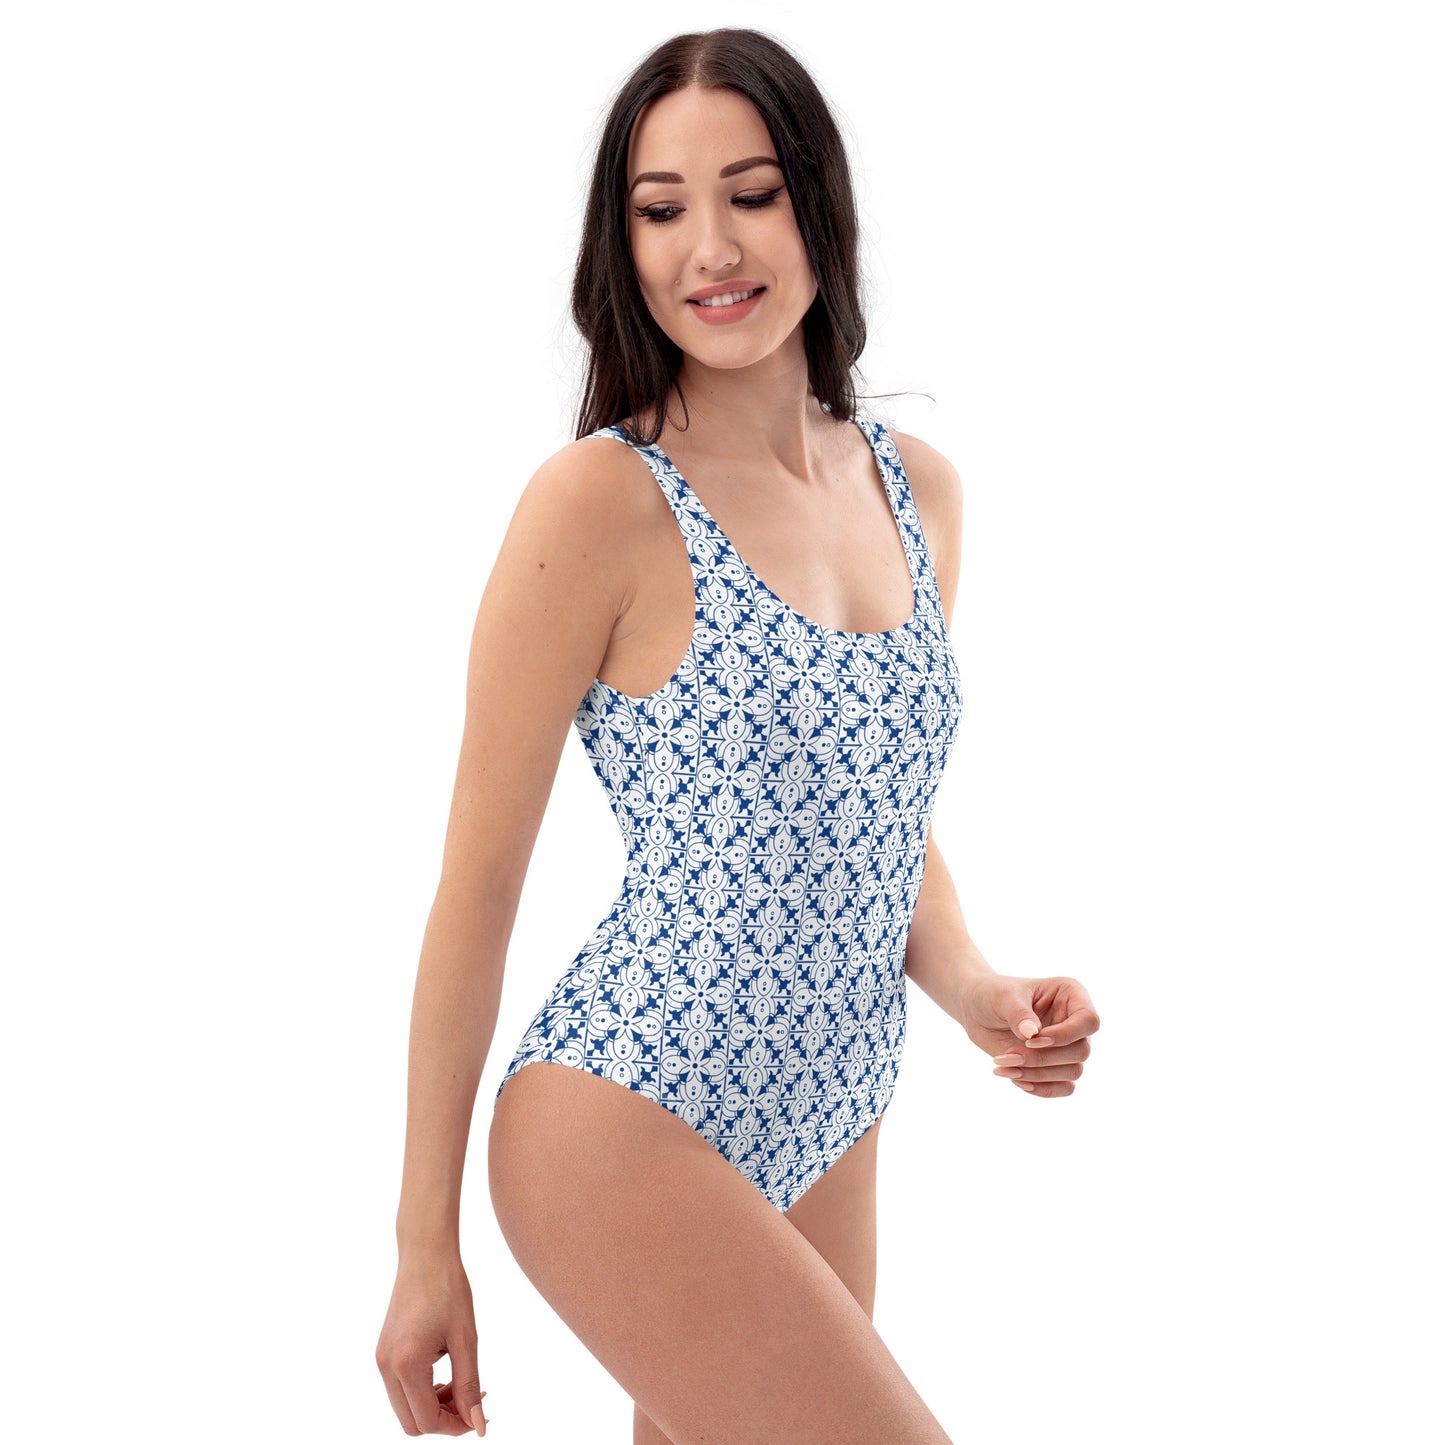 Azulejos - White/Blue - One-Piece Swimsuit